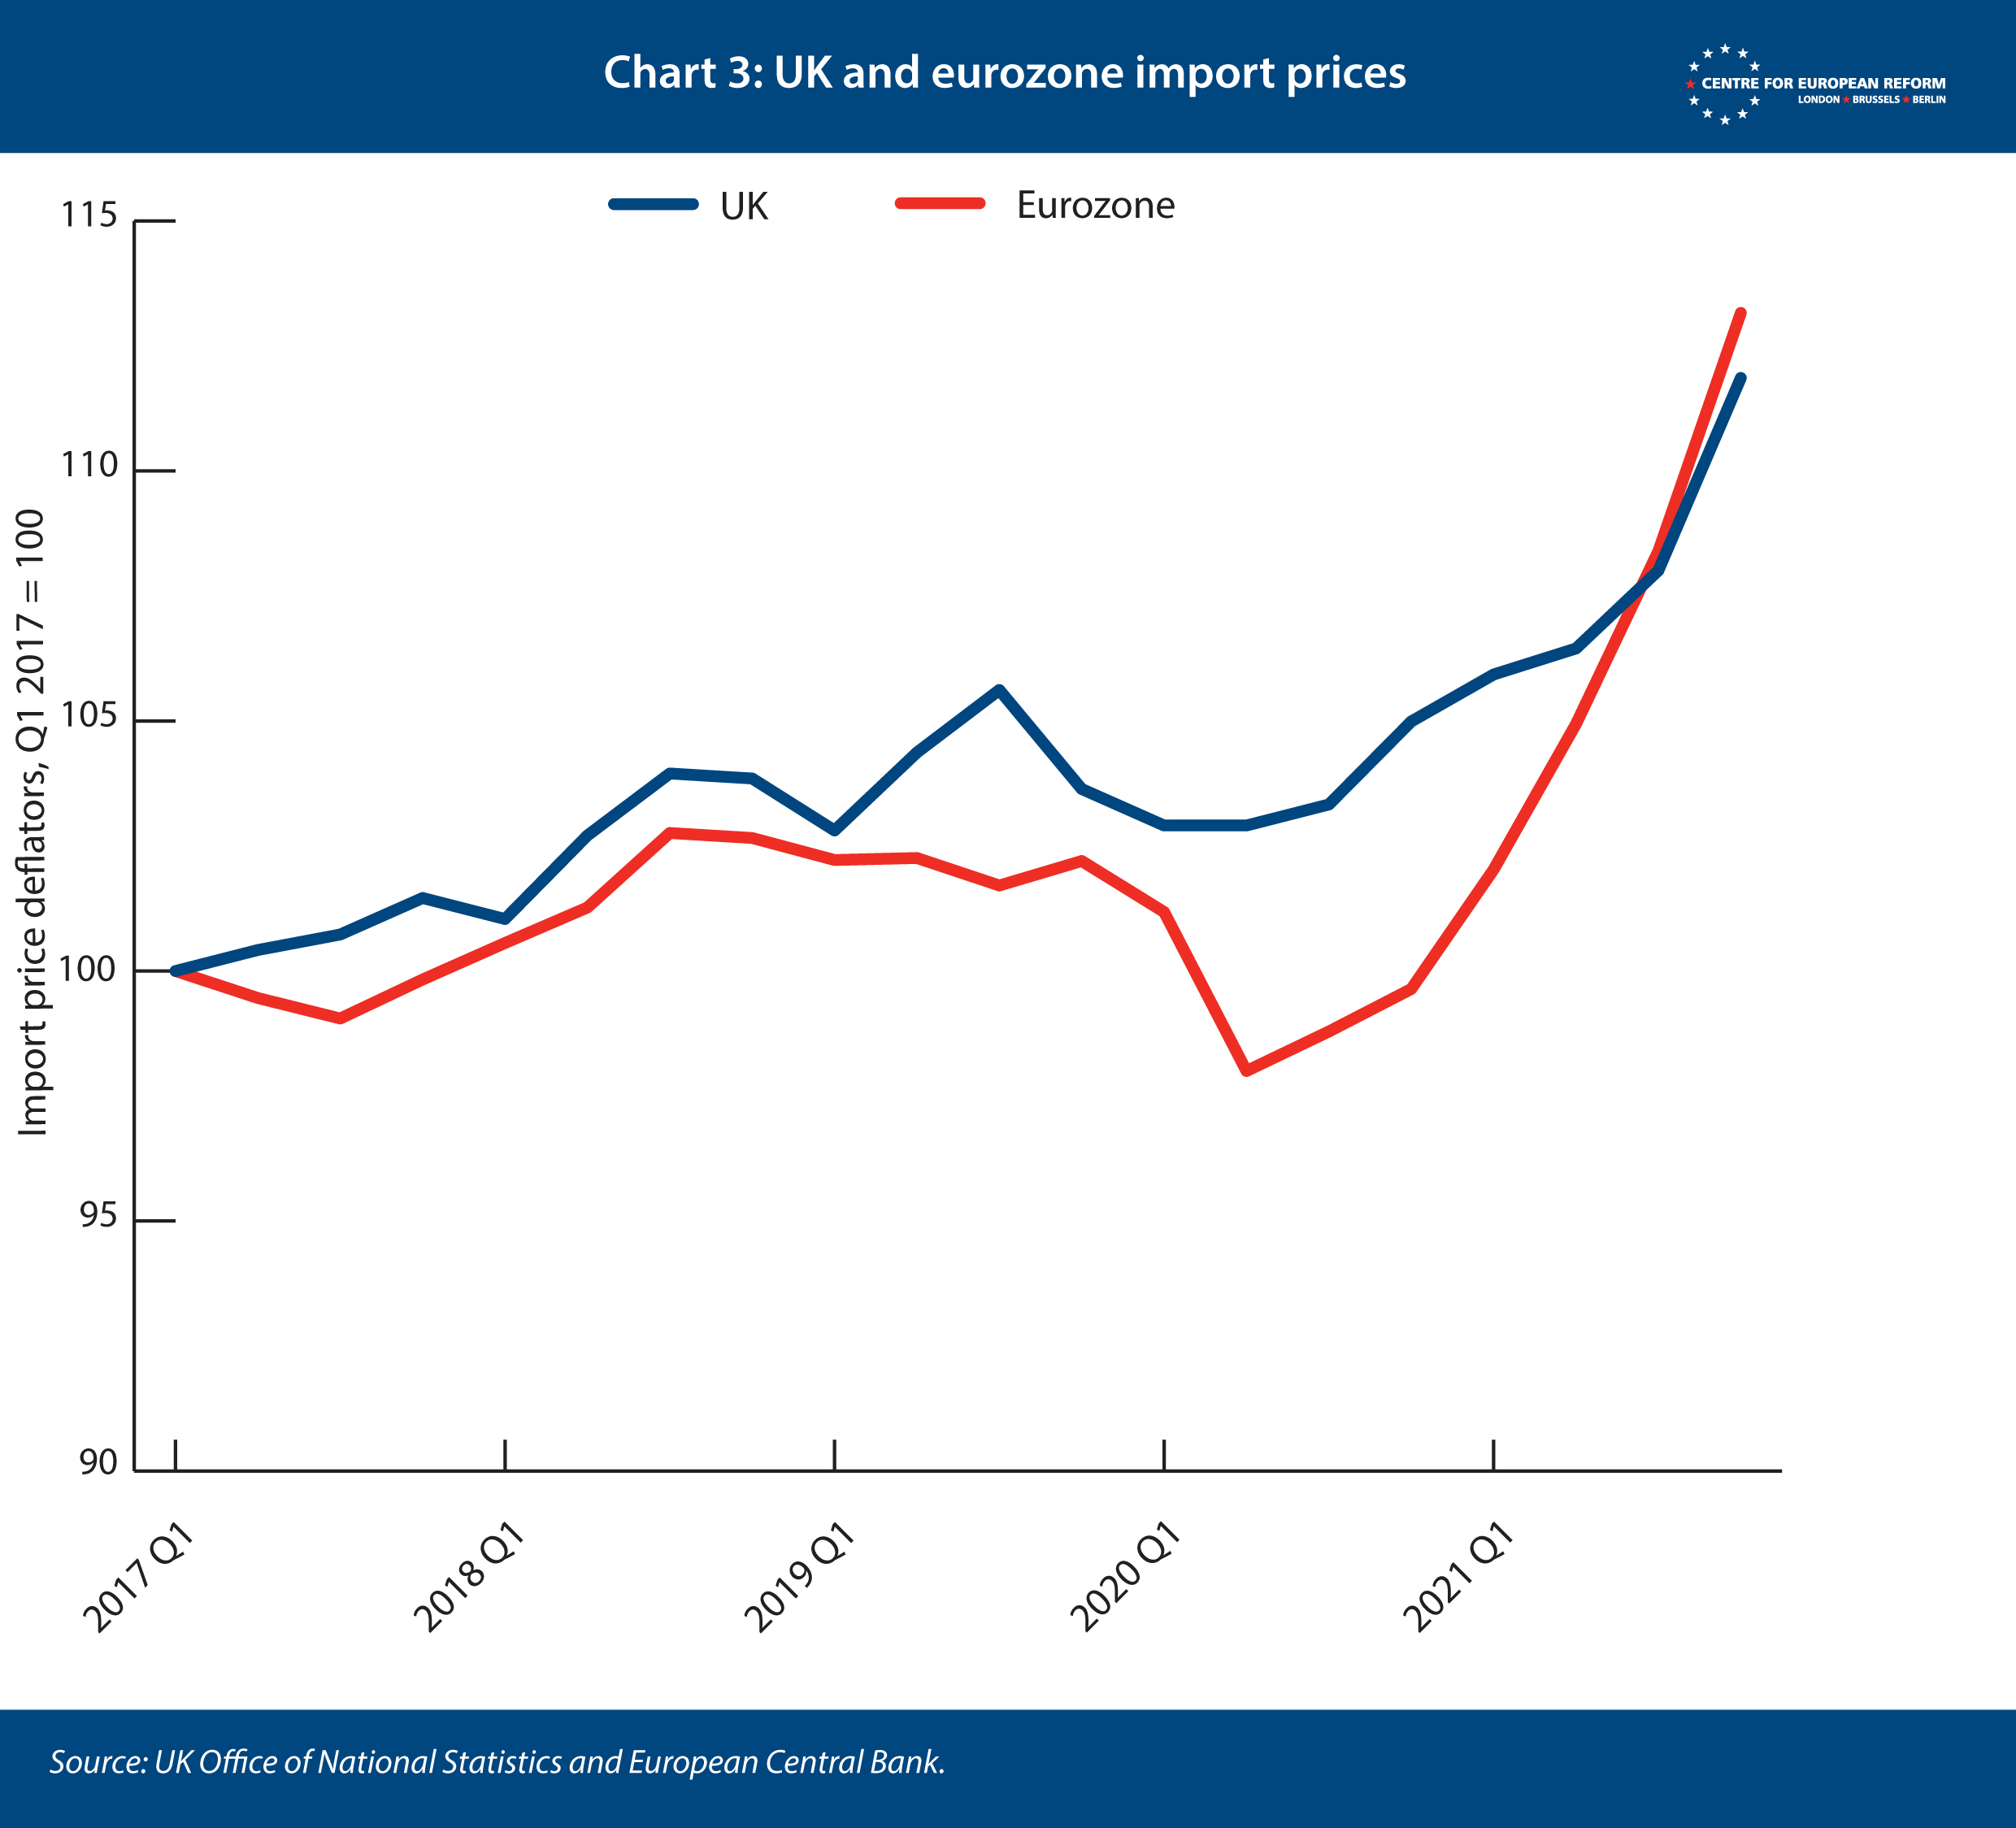 UK and eurozone import prices